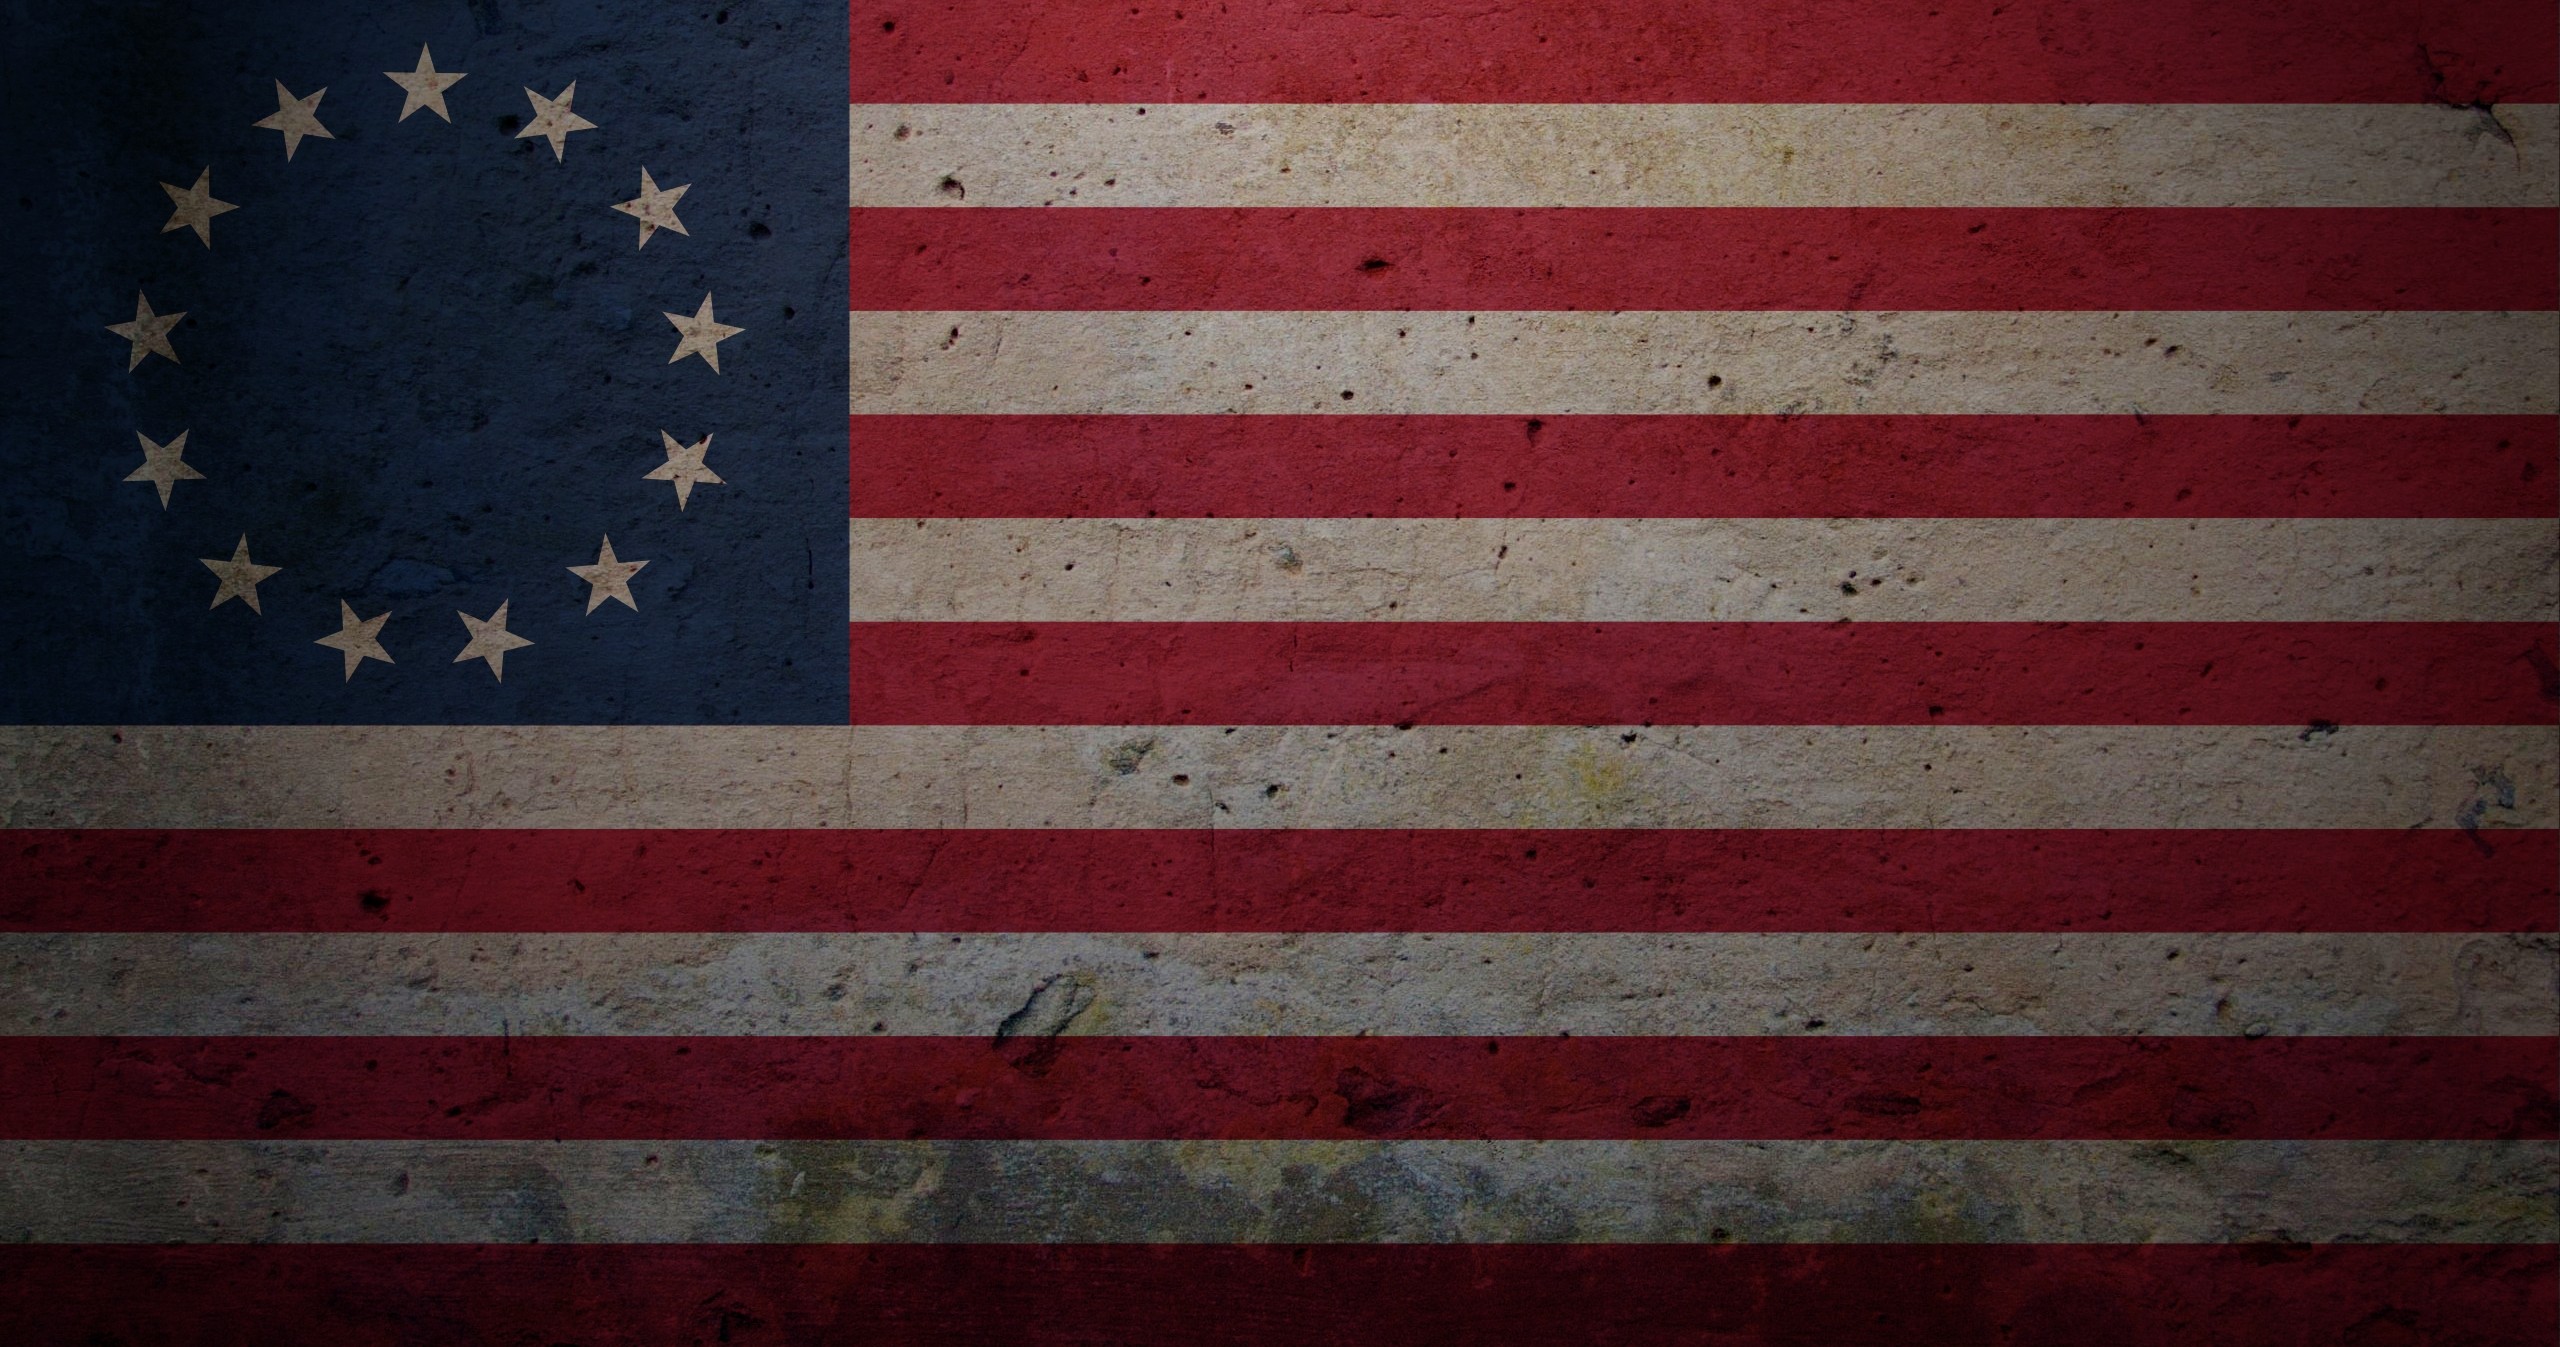 General 2560x1347 American flag USA 1777 (Year) flag patriotic digital art grunge